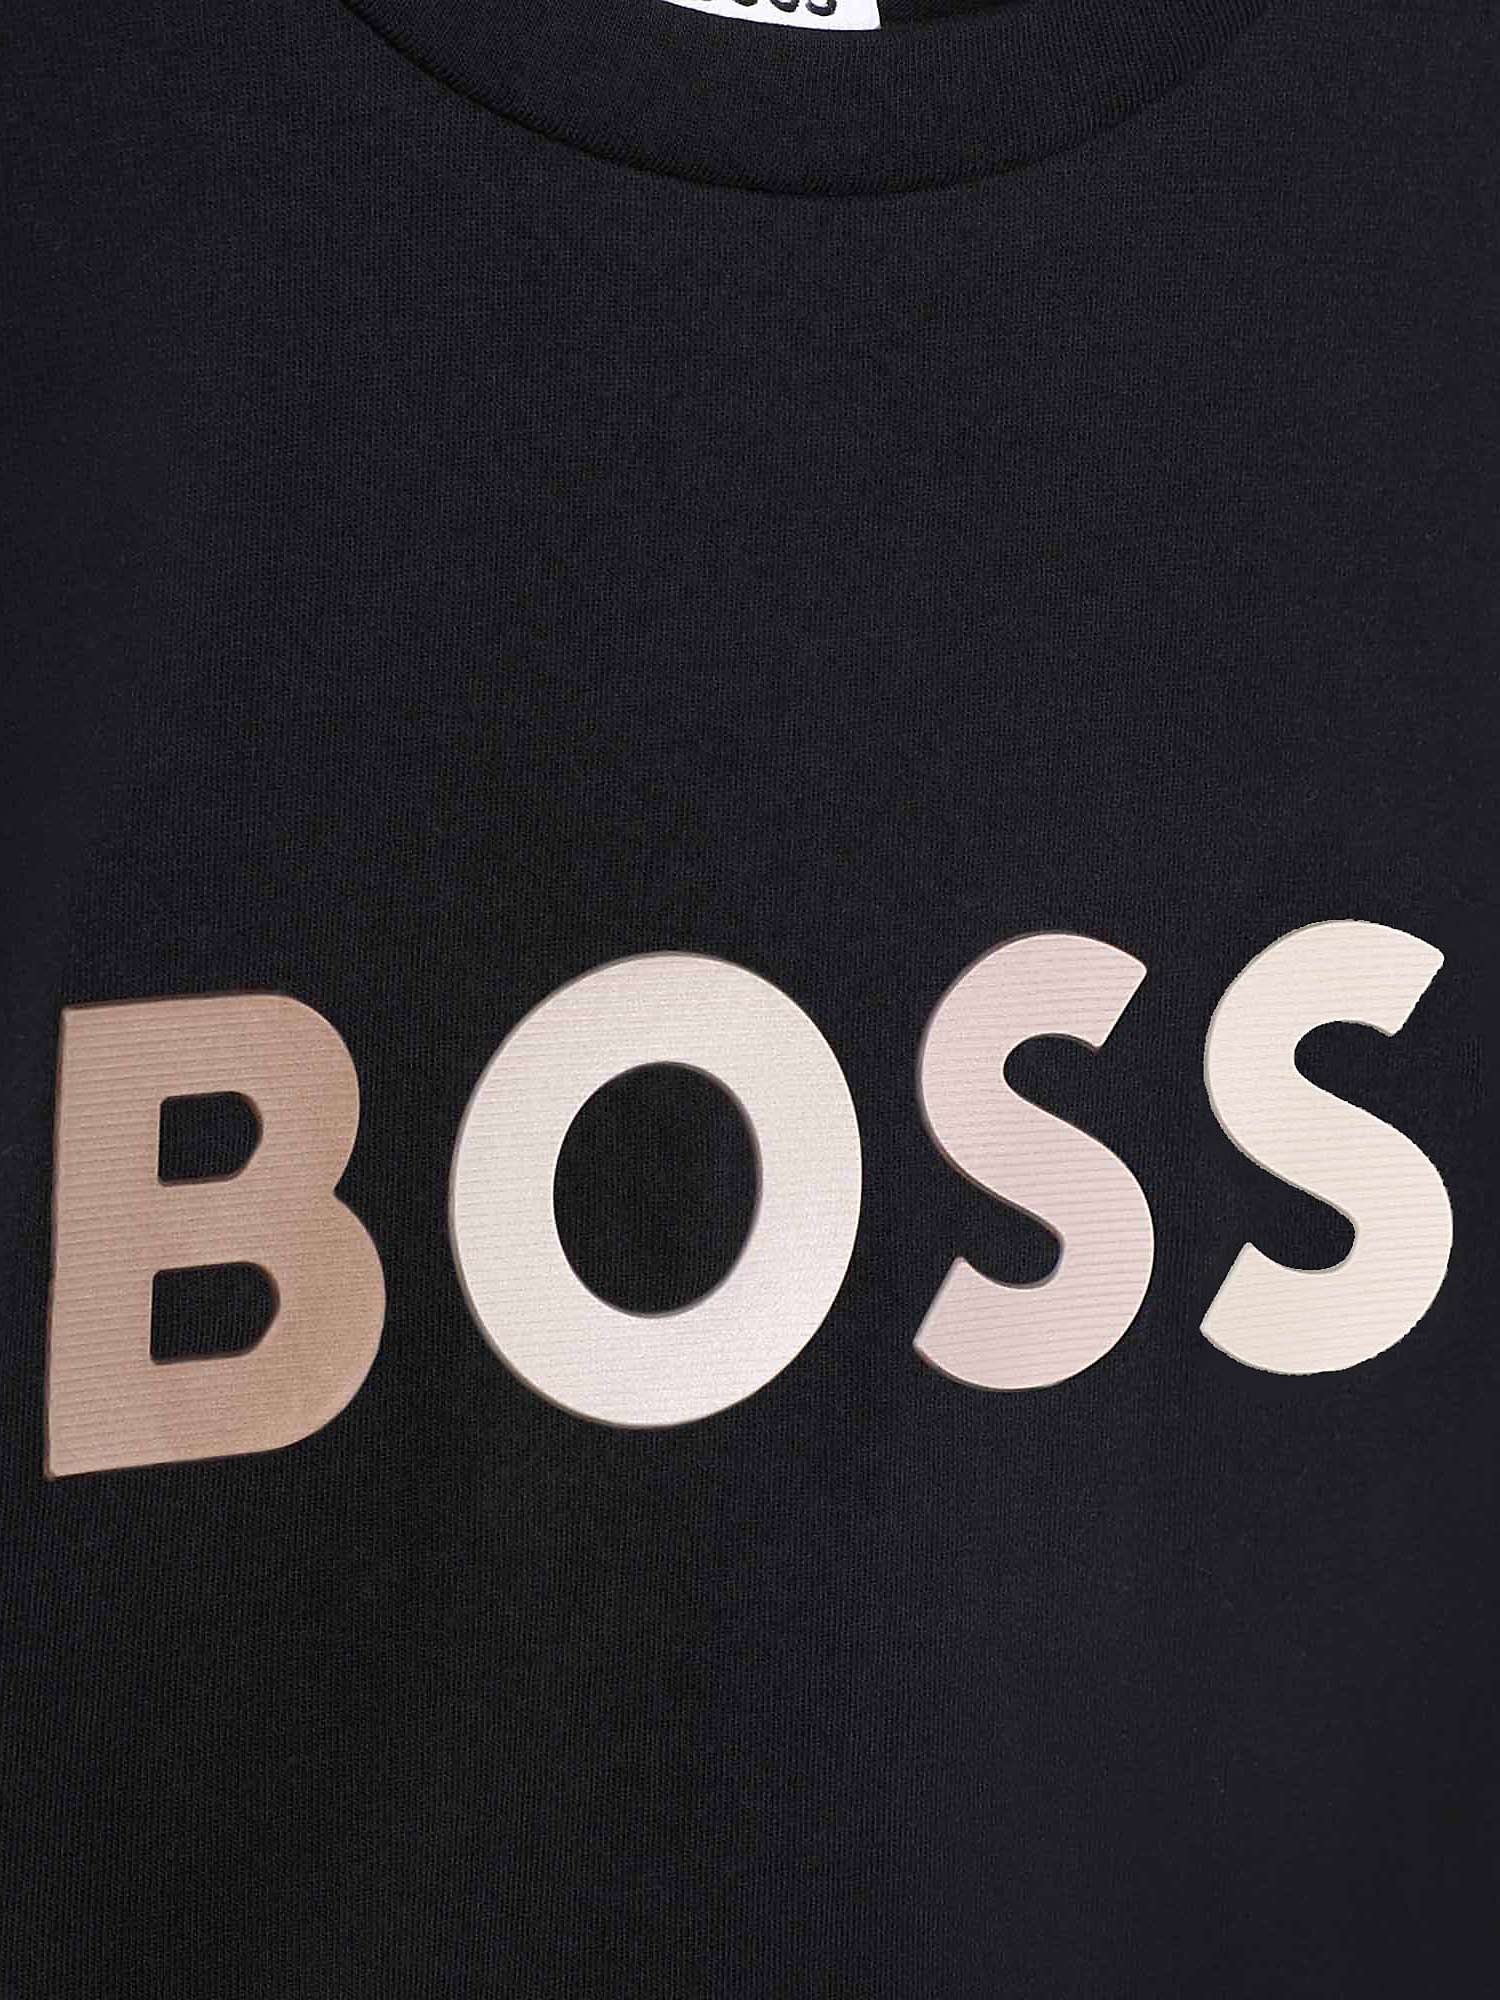 Buy BOSS Kids' Short Sleeve T-Shirt, Black Online at johnlewis.com